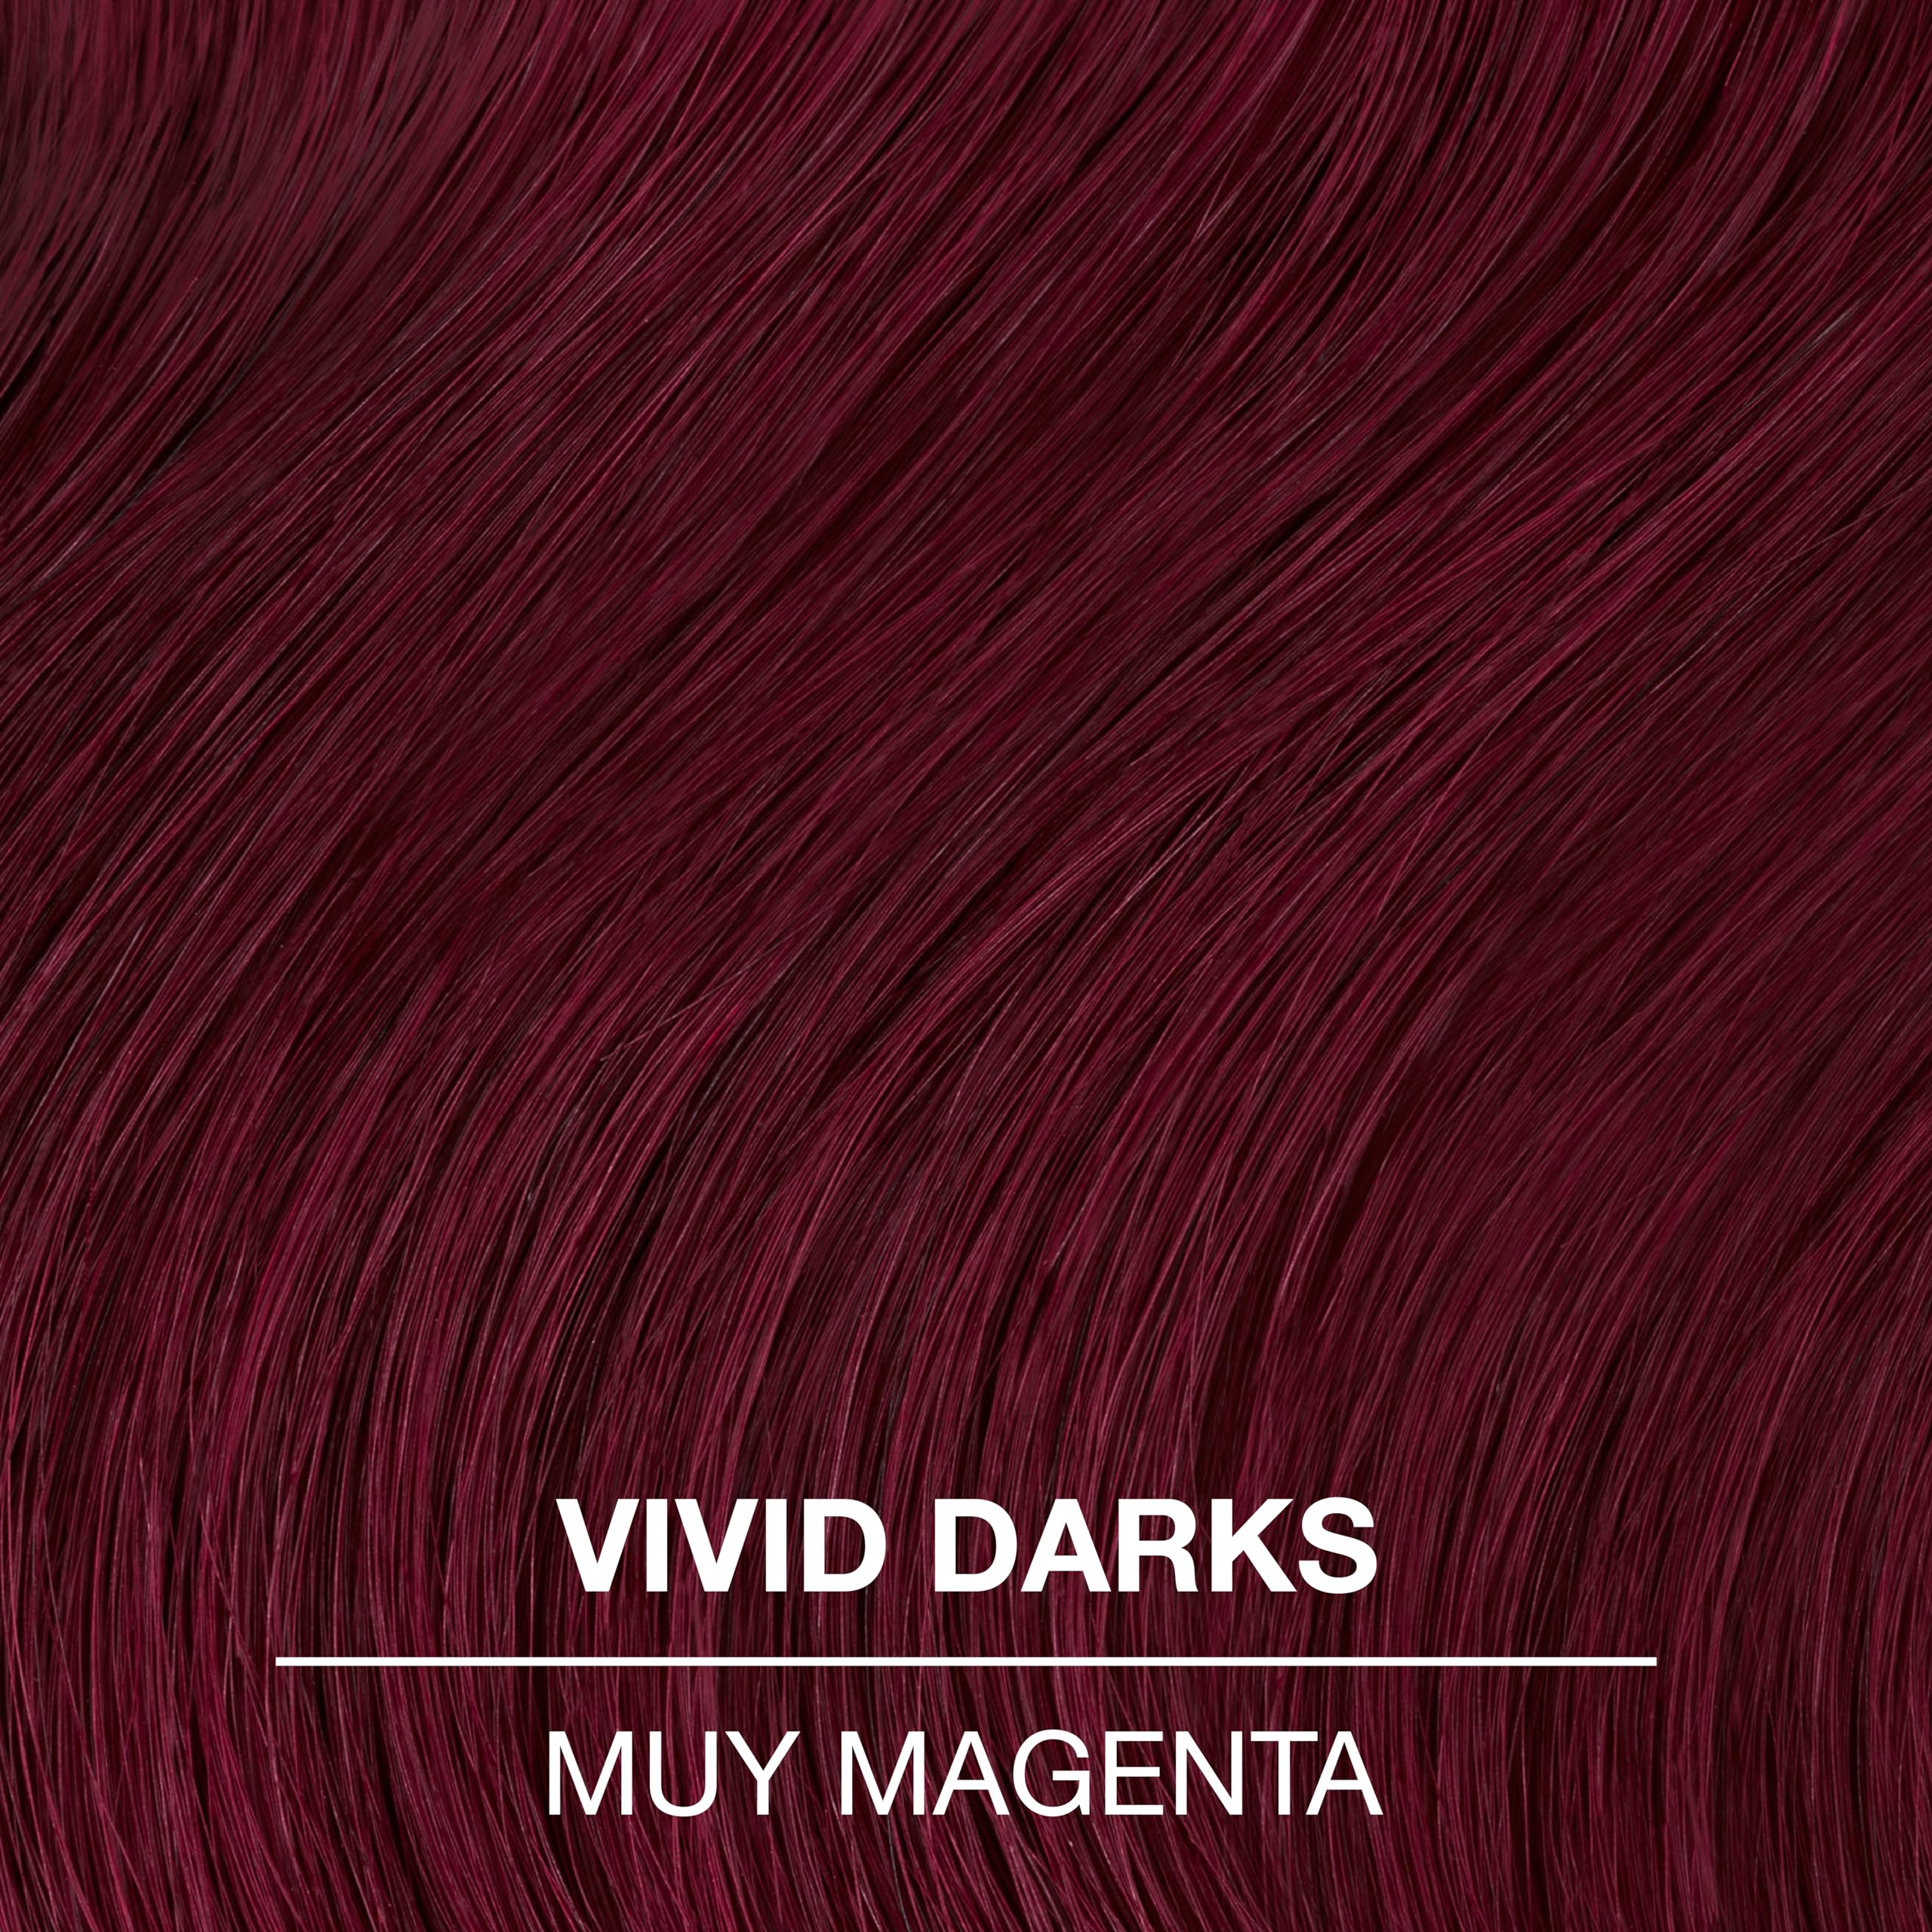 WELLA colorcharm VIVID DARKS Permanent Cream Color, Vibrant Color for Dark Hair, Nourishing Vegan Formula, No Bleach Needed, Muy Magenta